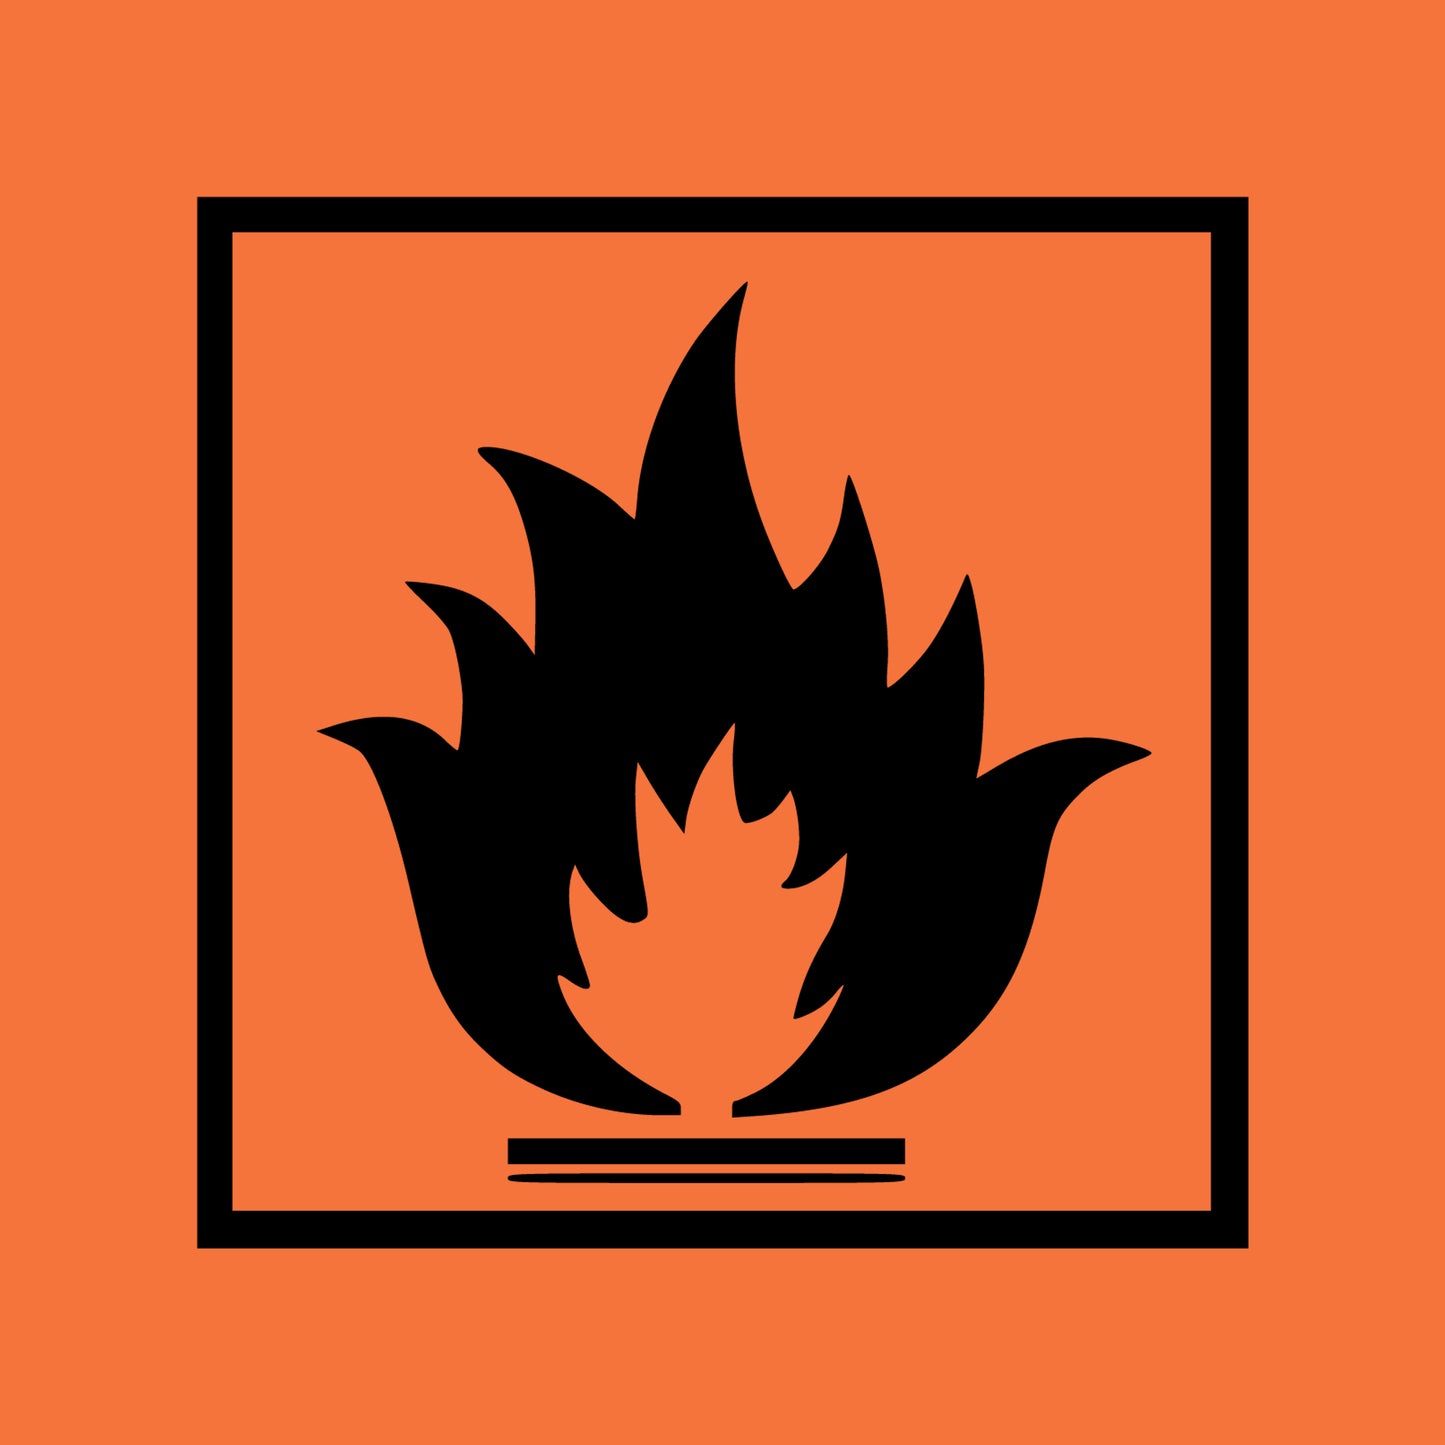 Warning - Flammable